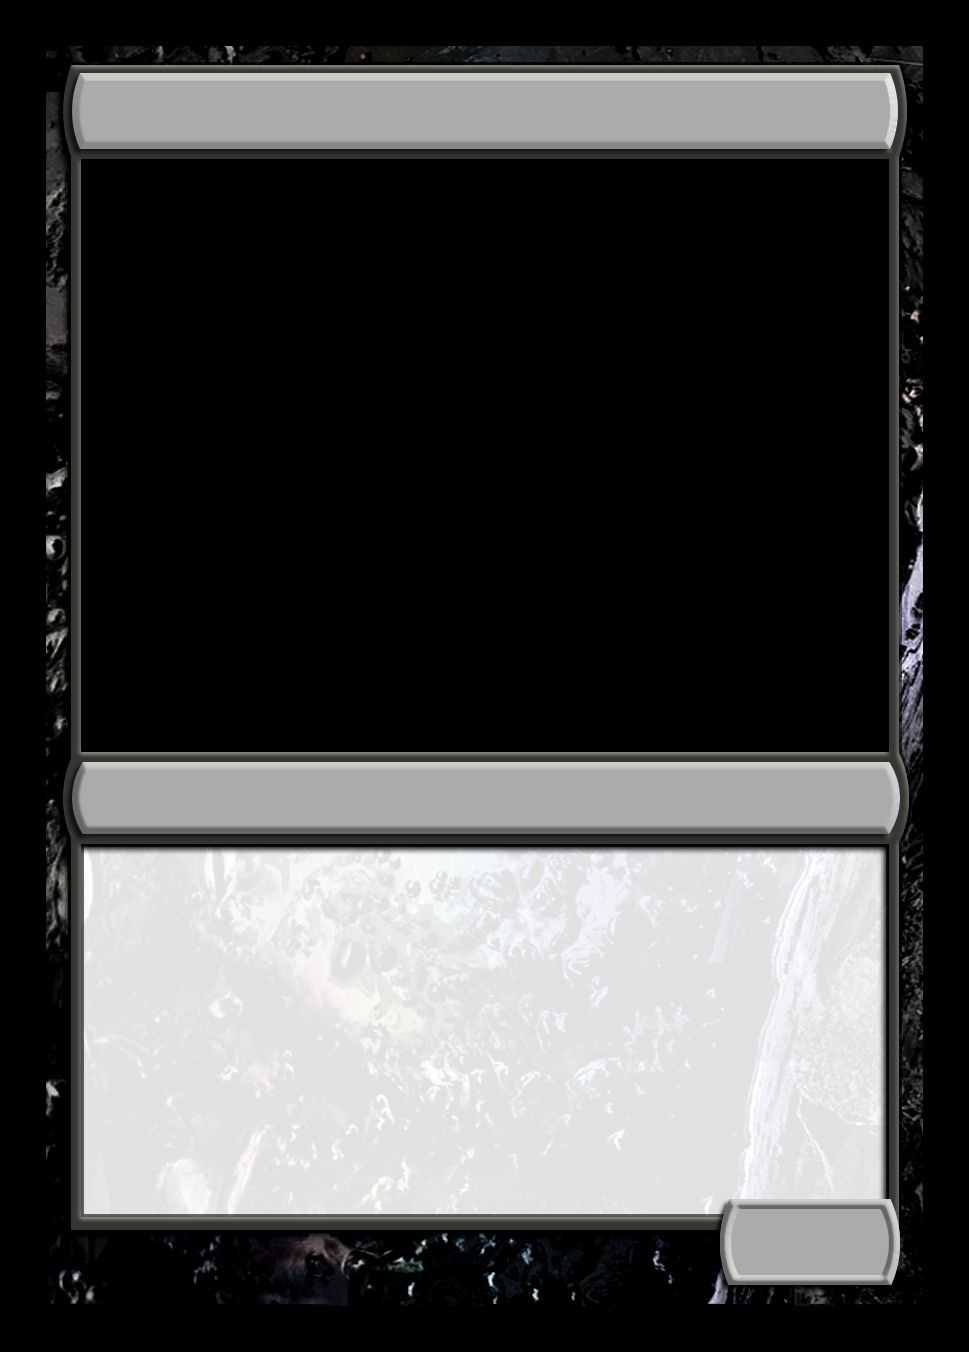 Black Magic The Gathering Card Blank Template - Imgflip Intended For Blank Magic Card Template